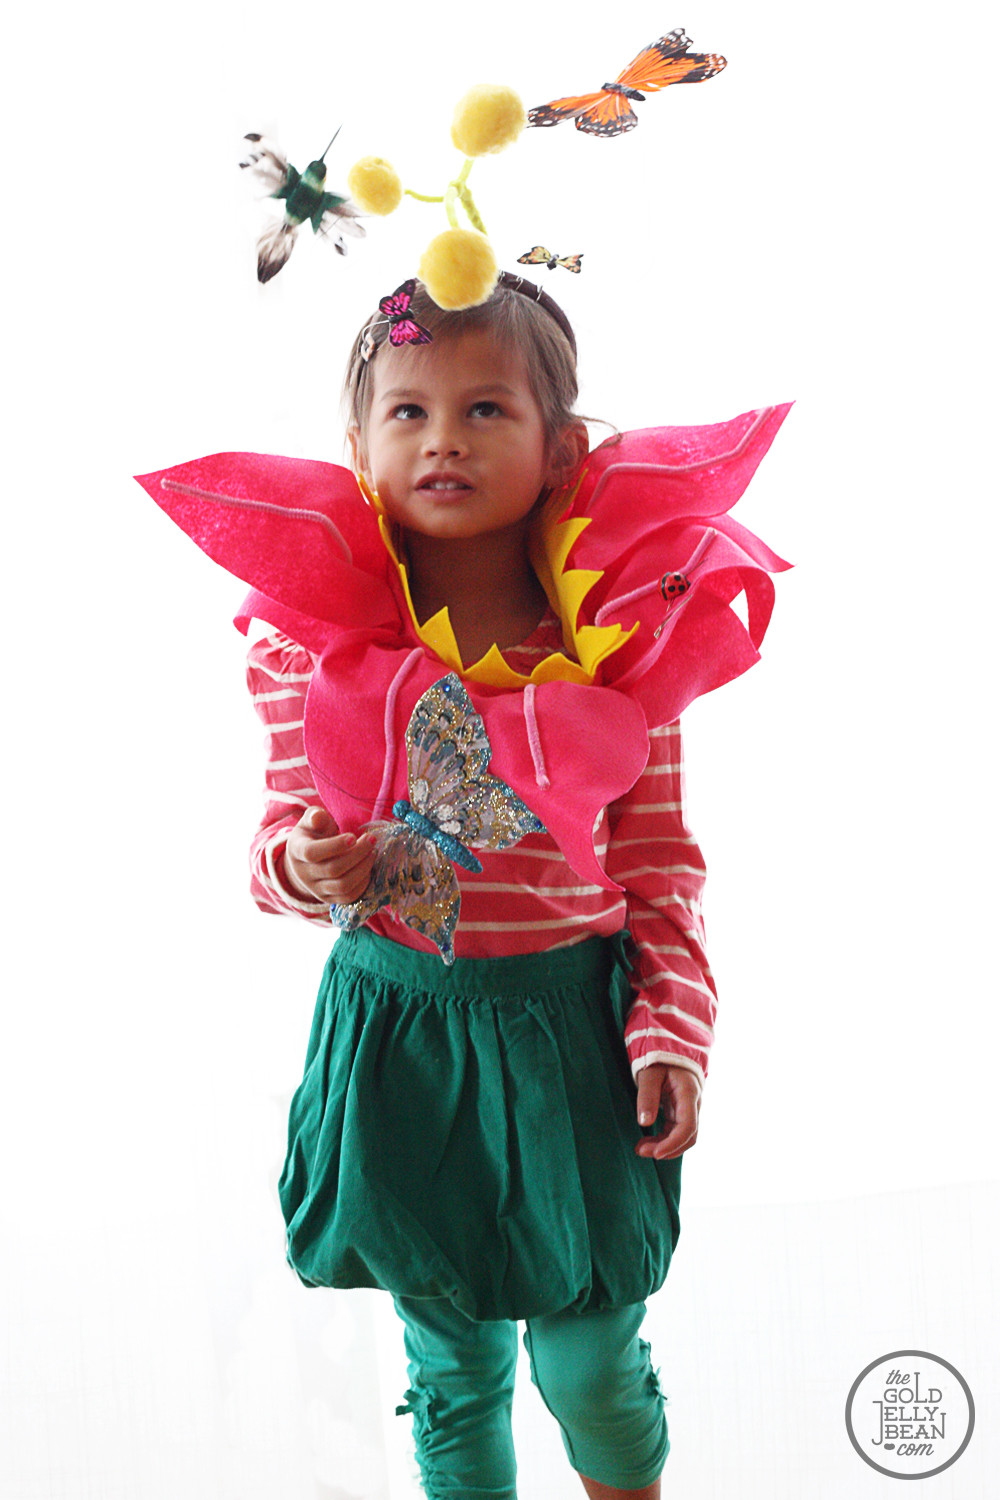 Best ideas about Flower Costume DIY
. Save or Pin DIY Halloween Costume Garden Flower Now.